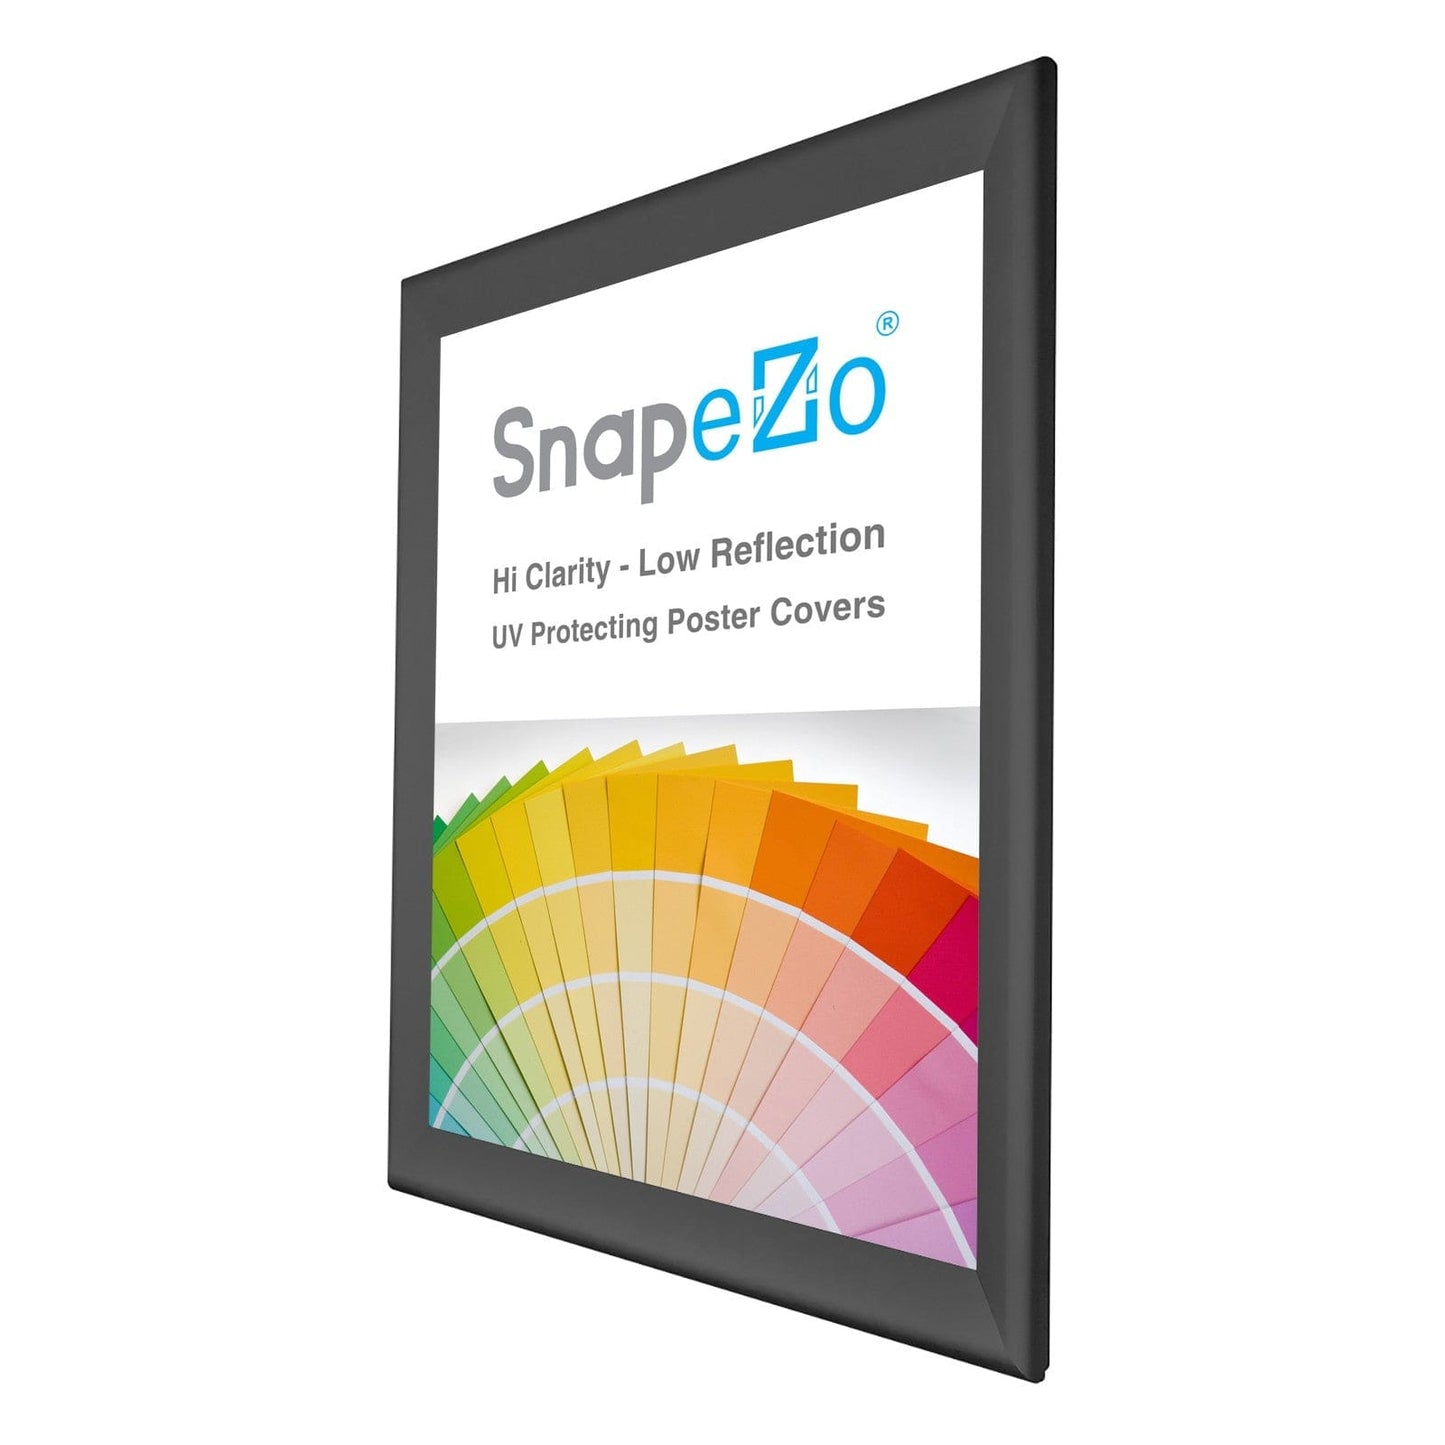 29x42 Black SnapeZo® Snap Frame - 1.2" Profile - Snap Frames Direct